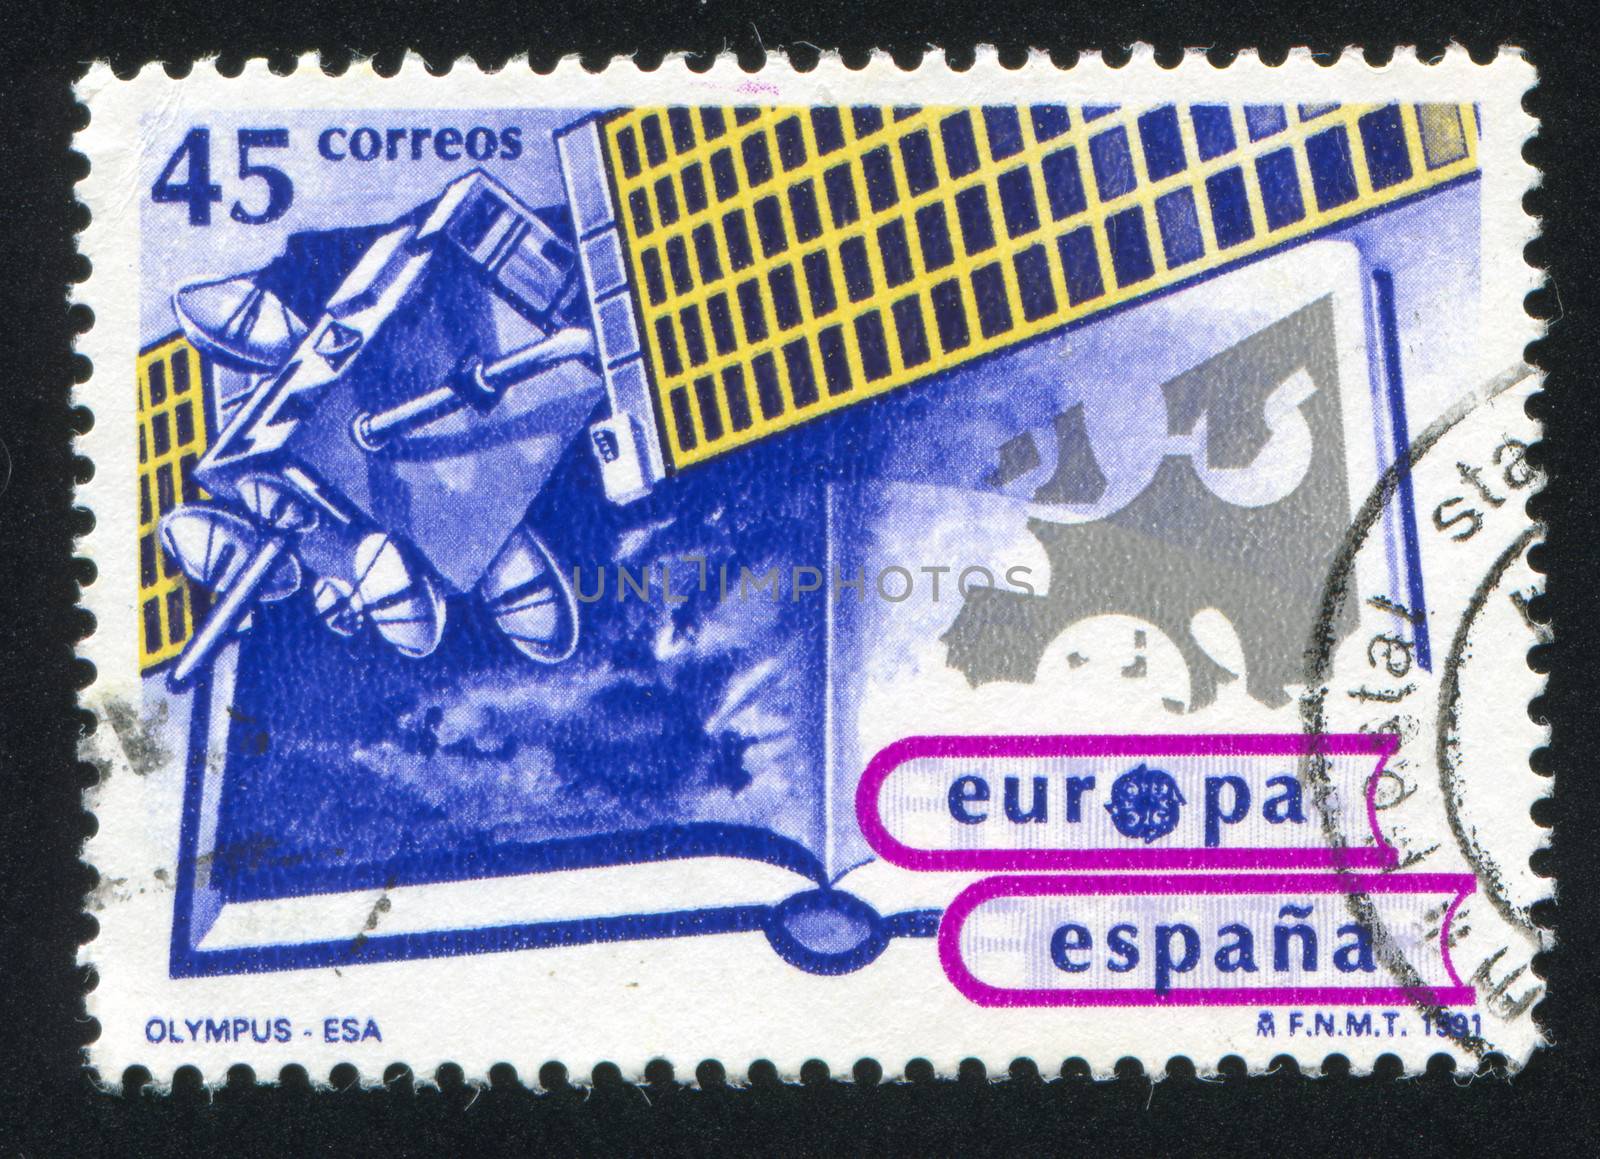 SPAIN - CIRCA 1991: stamp printed by Spain, shows Olympus I Satellite, circa 1991